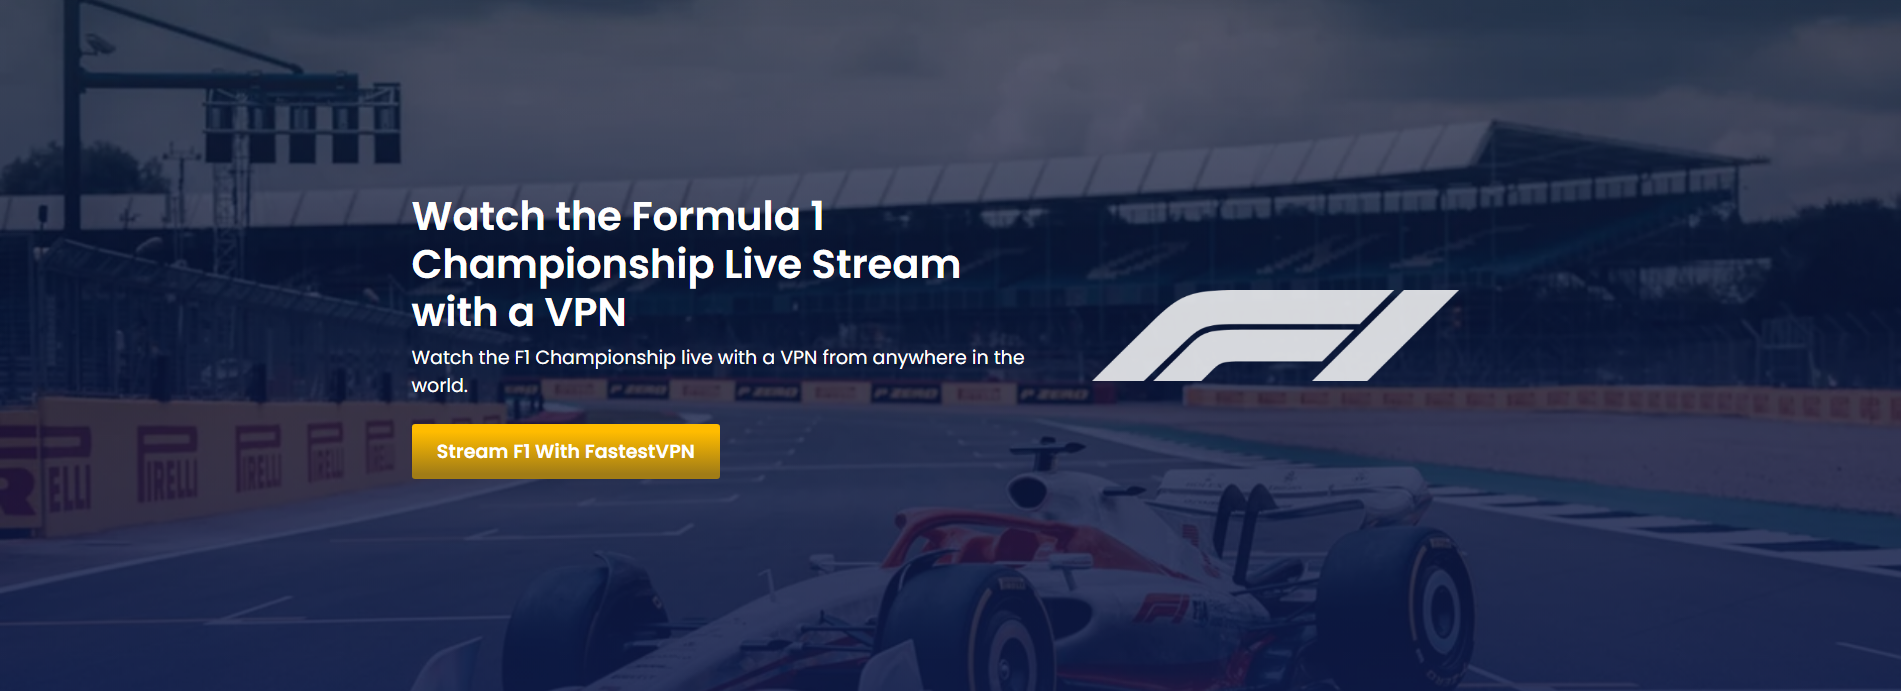 formula 1 live stream vpn